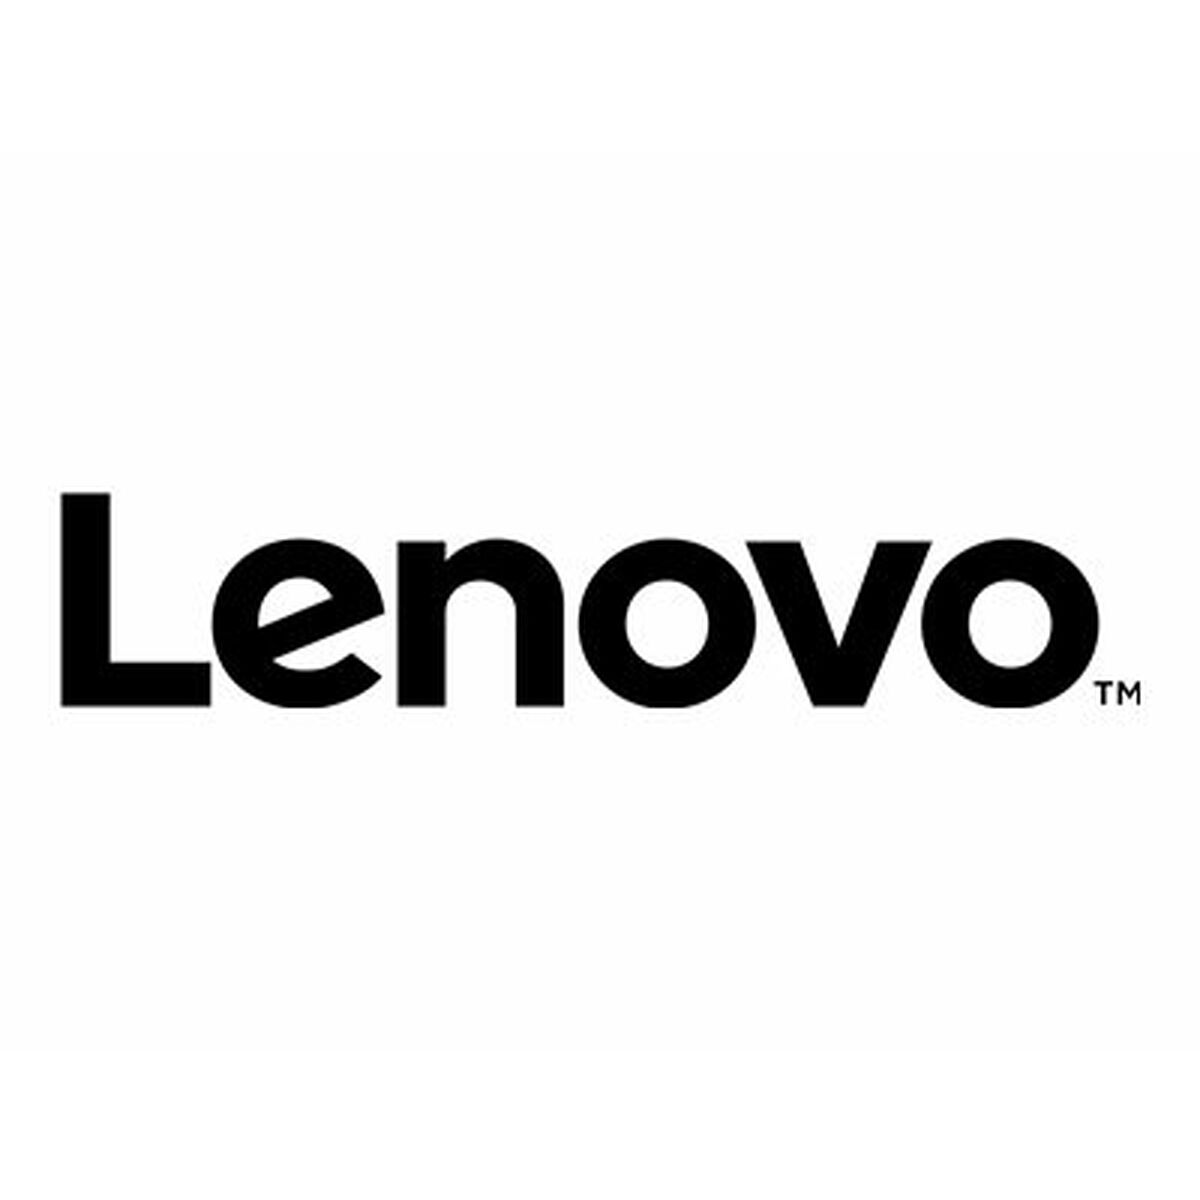 Power supply Lenovo 7N67A00883 750 W 80 PLUS Platinum-1